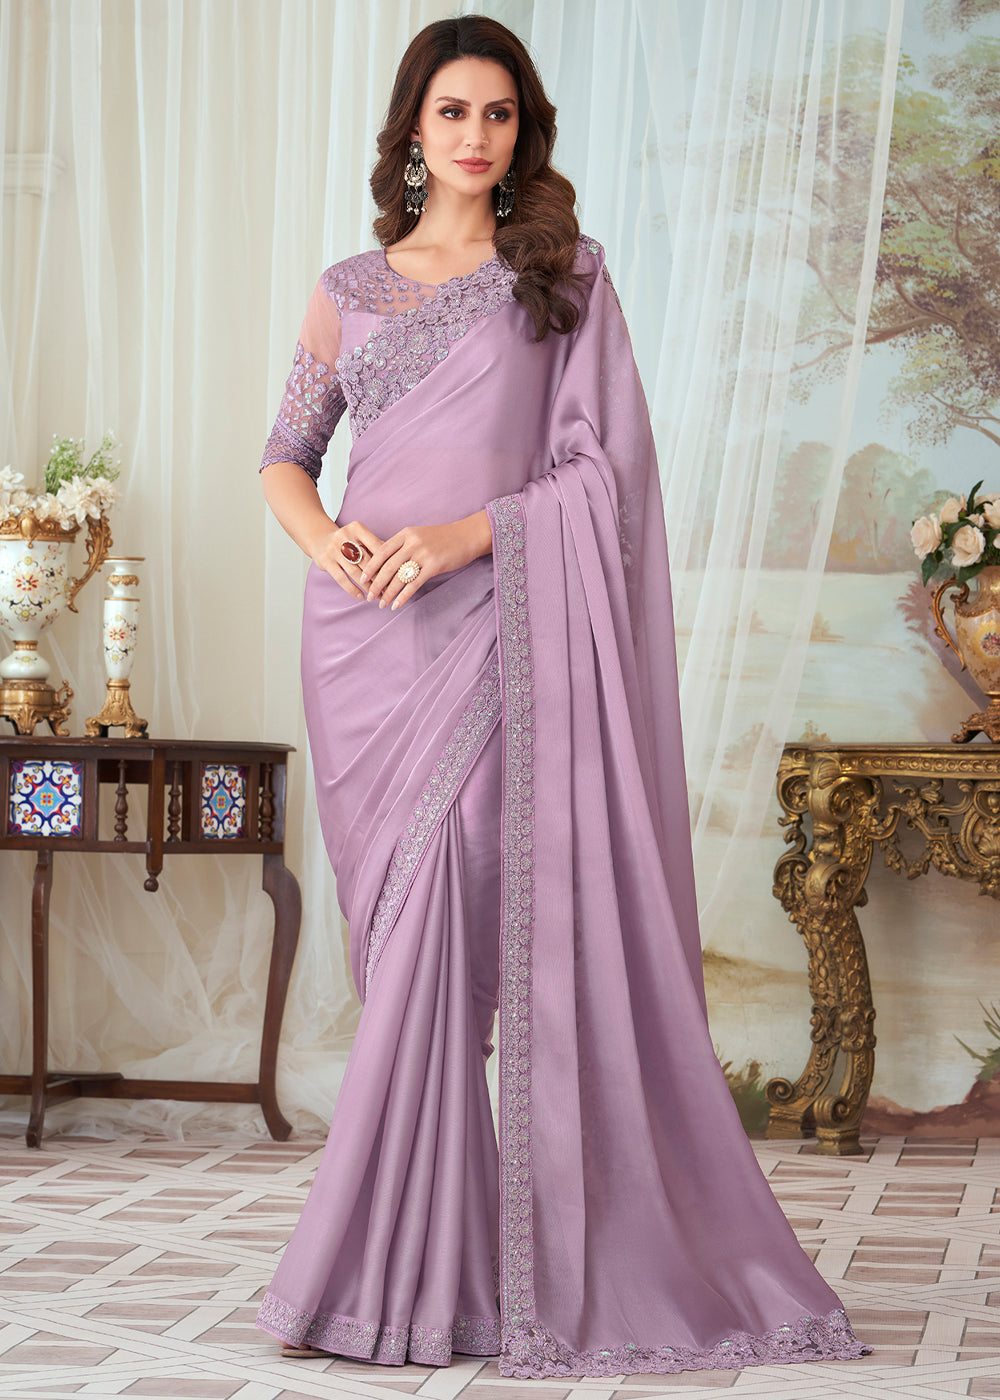 Dark purple satin saree with silver designer blouse and belt in Chennai |  Clasf fashion